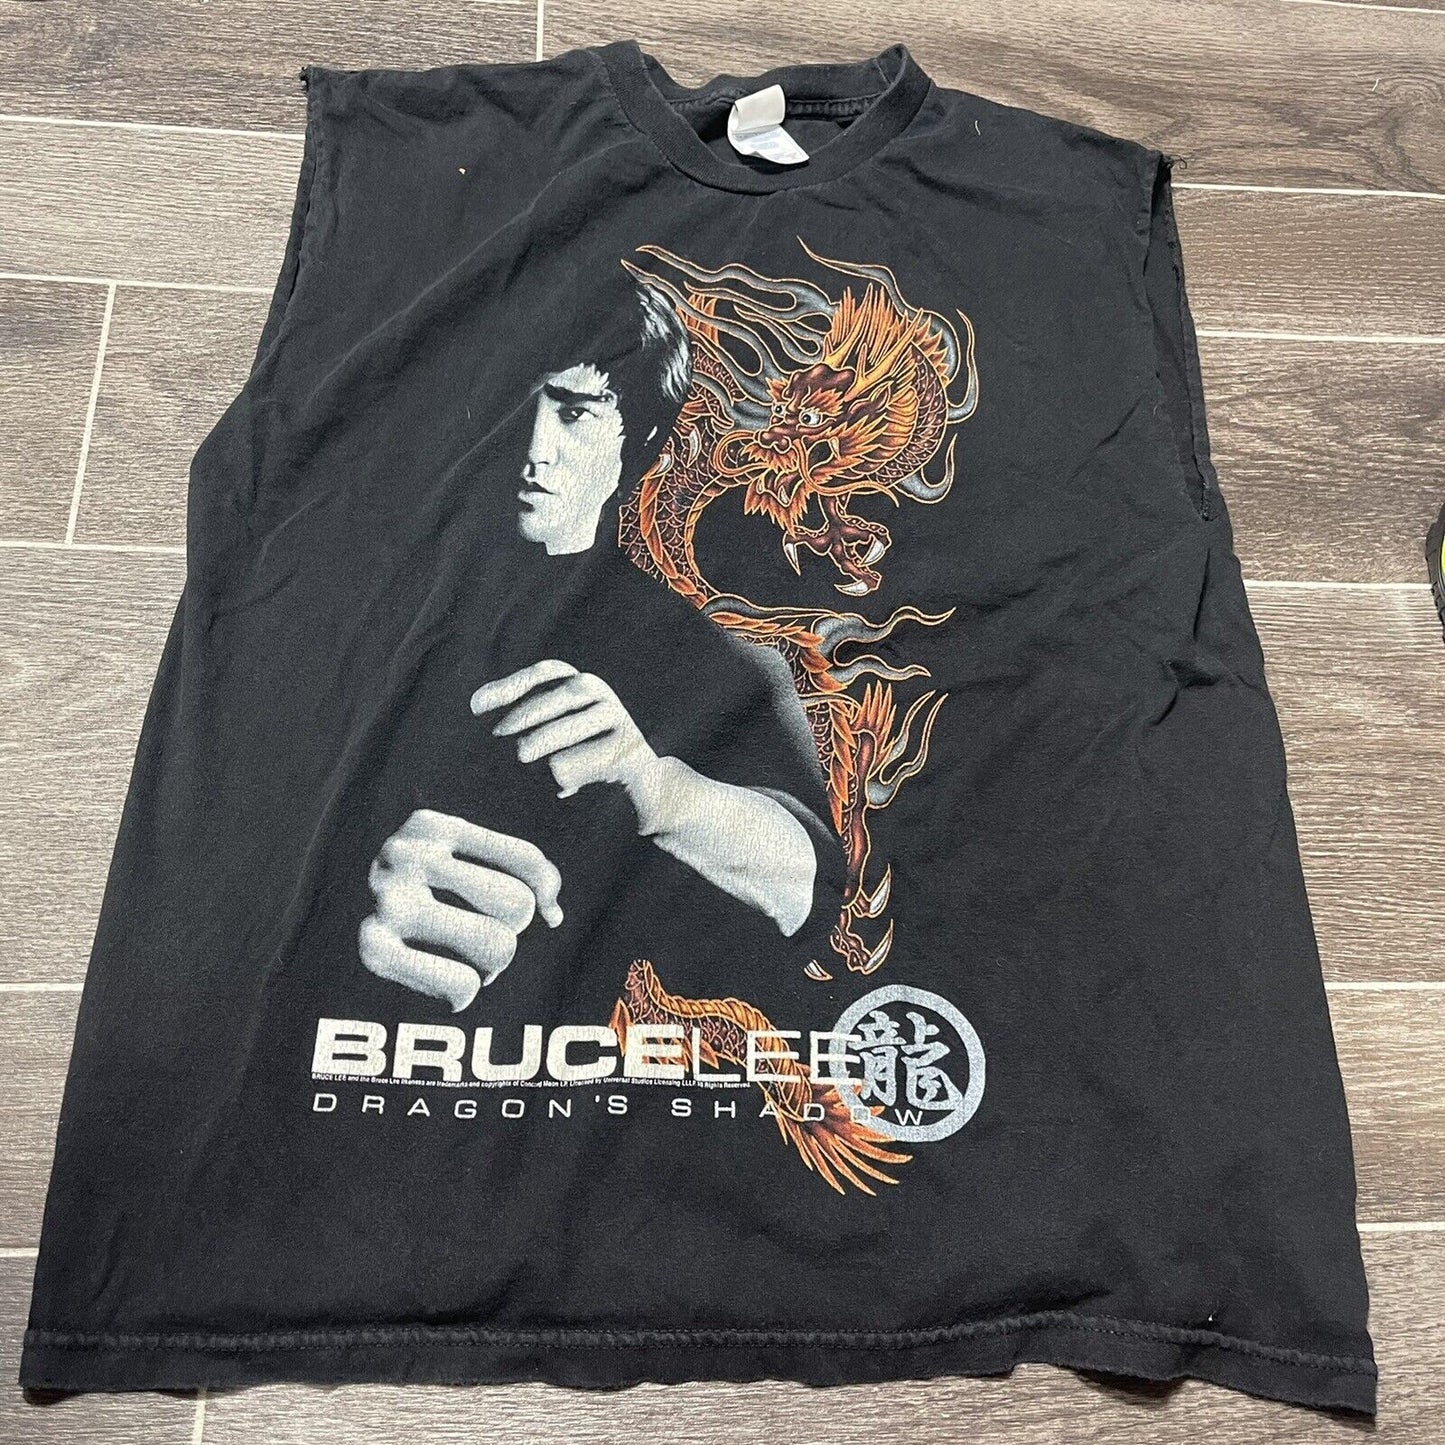 Vintage 90s Bruce Lee Dragon’s Shadow Men’s Black Tultex T-Shirt Size Large